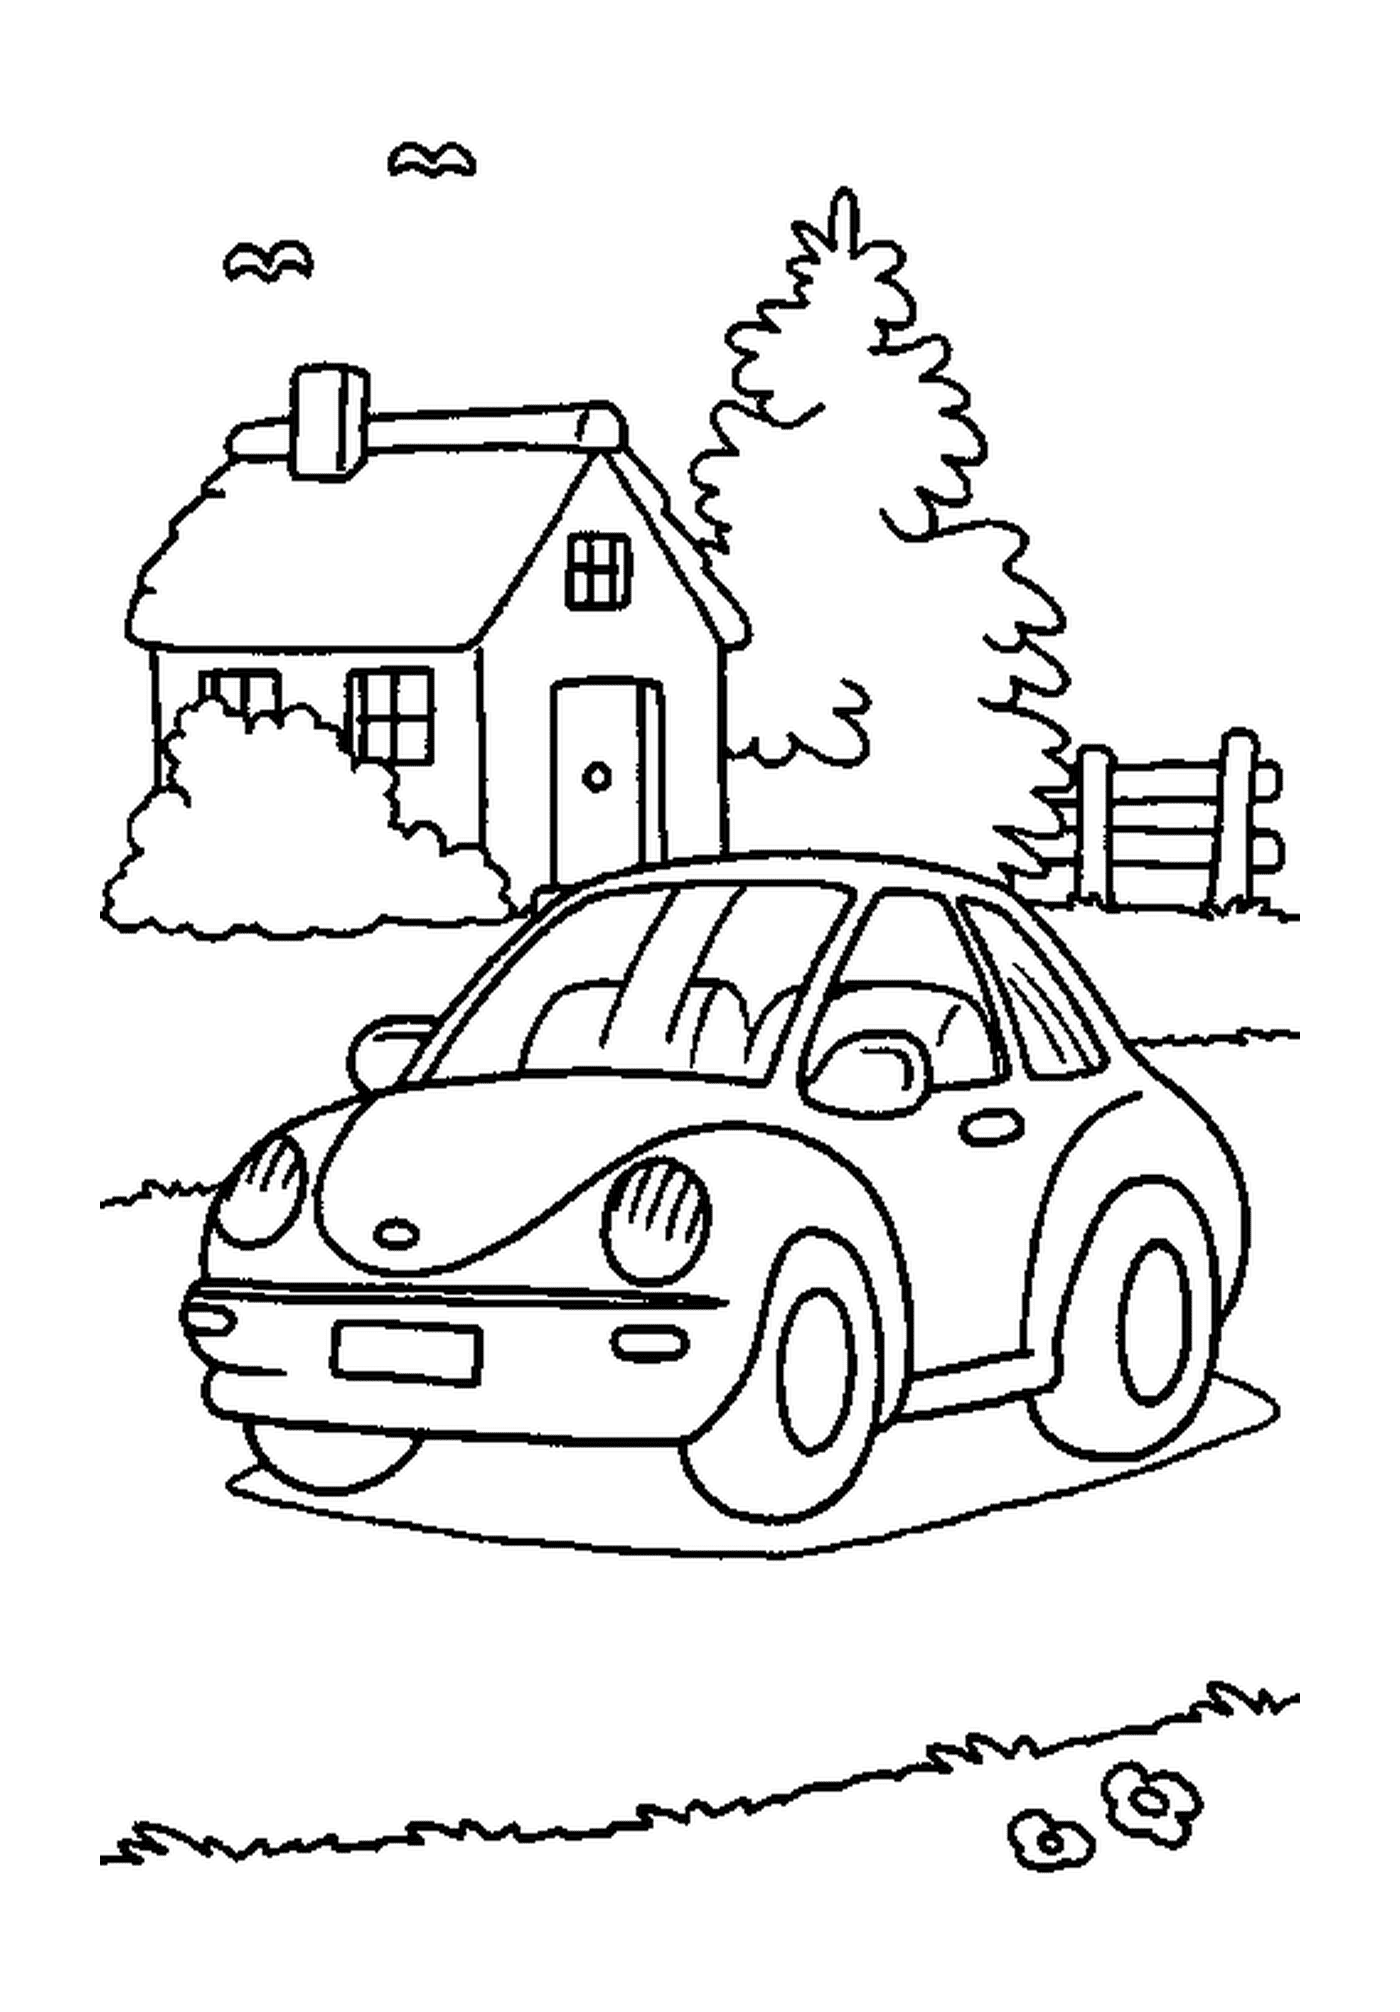  House with car 